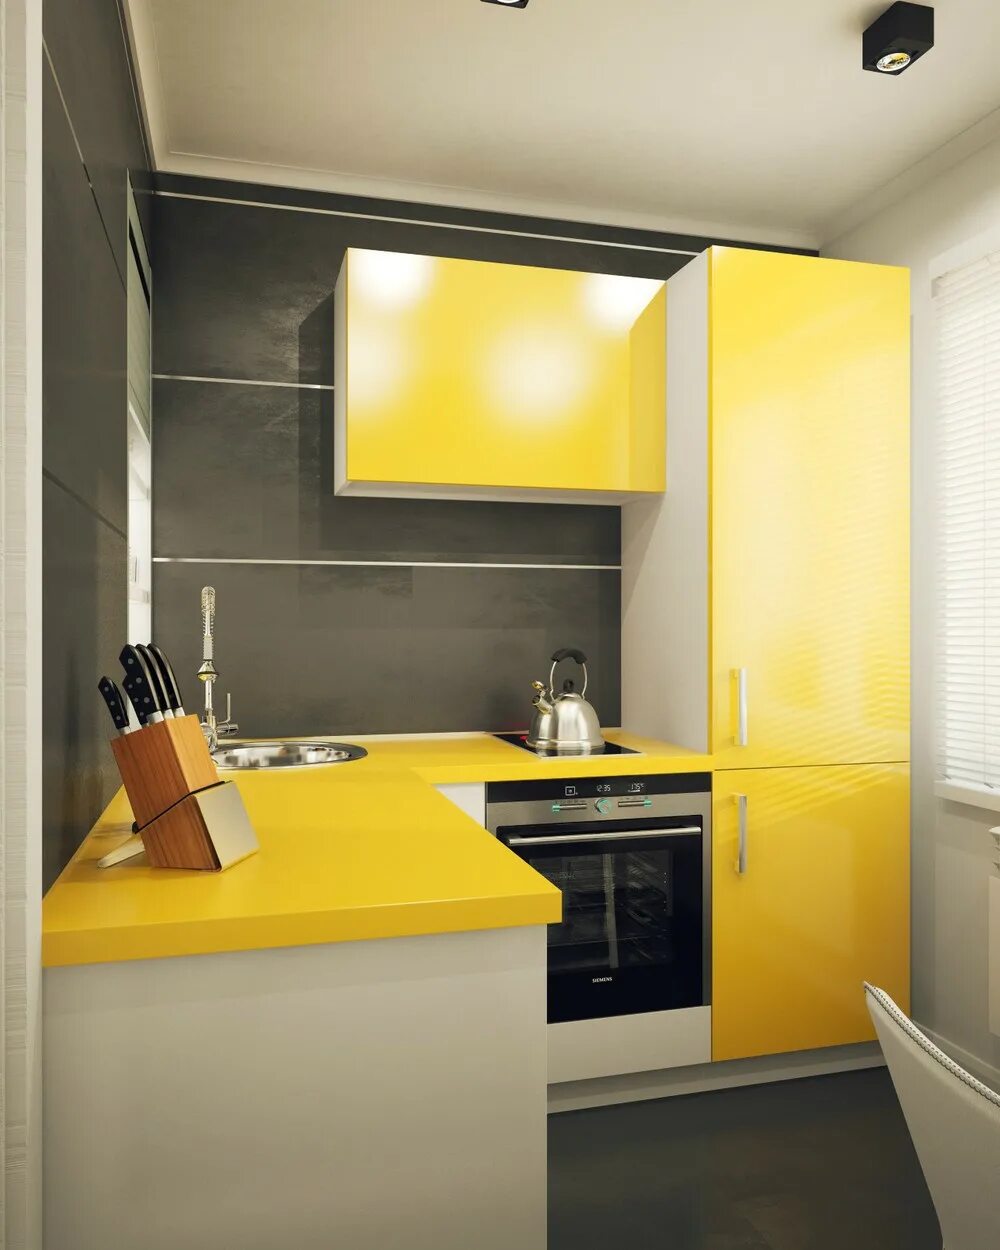 Интерьер маленькой кухни. Желтый кухонный гарнитур. Планировка маленькой кухни. Кухня в желтом стиле.